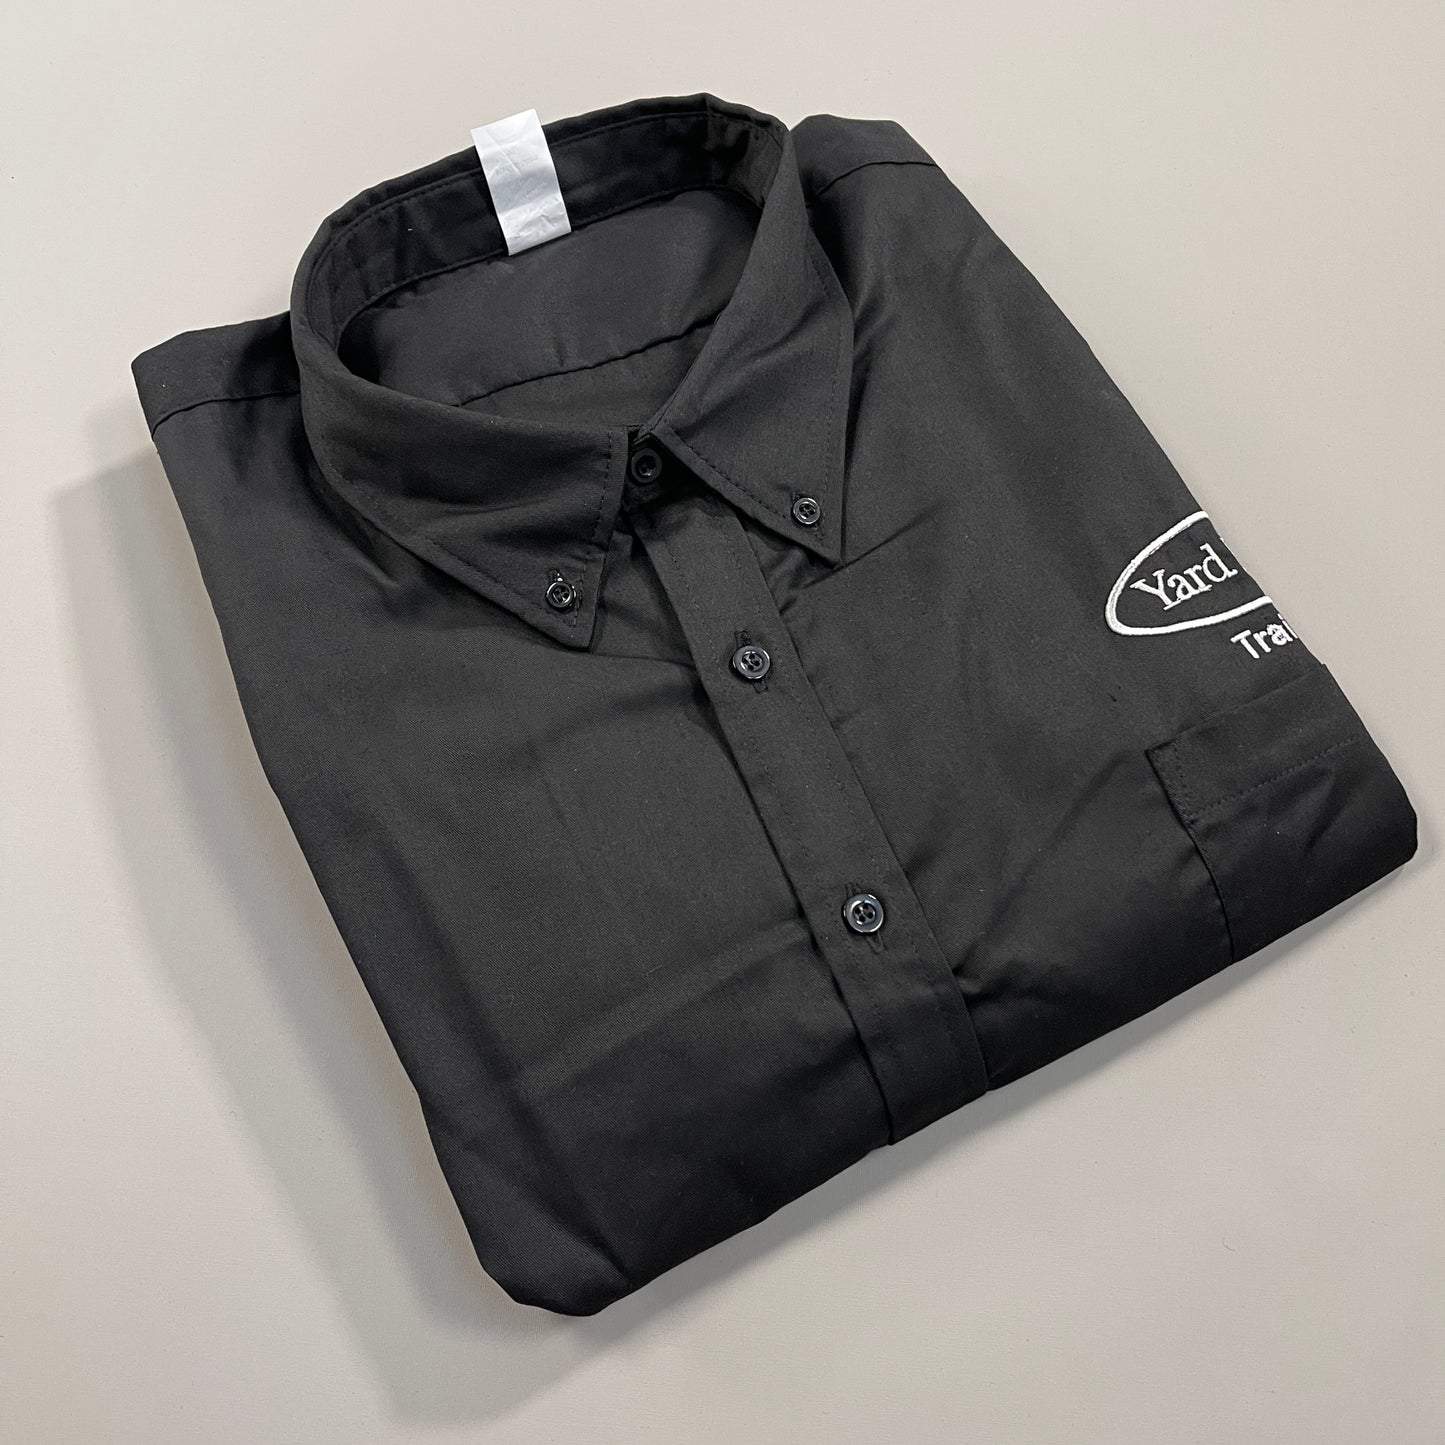 YARD HOUSE Employee "Trainer" Button Up Collared Shirt Men's Sz XL Black (New)